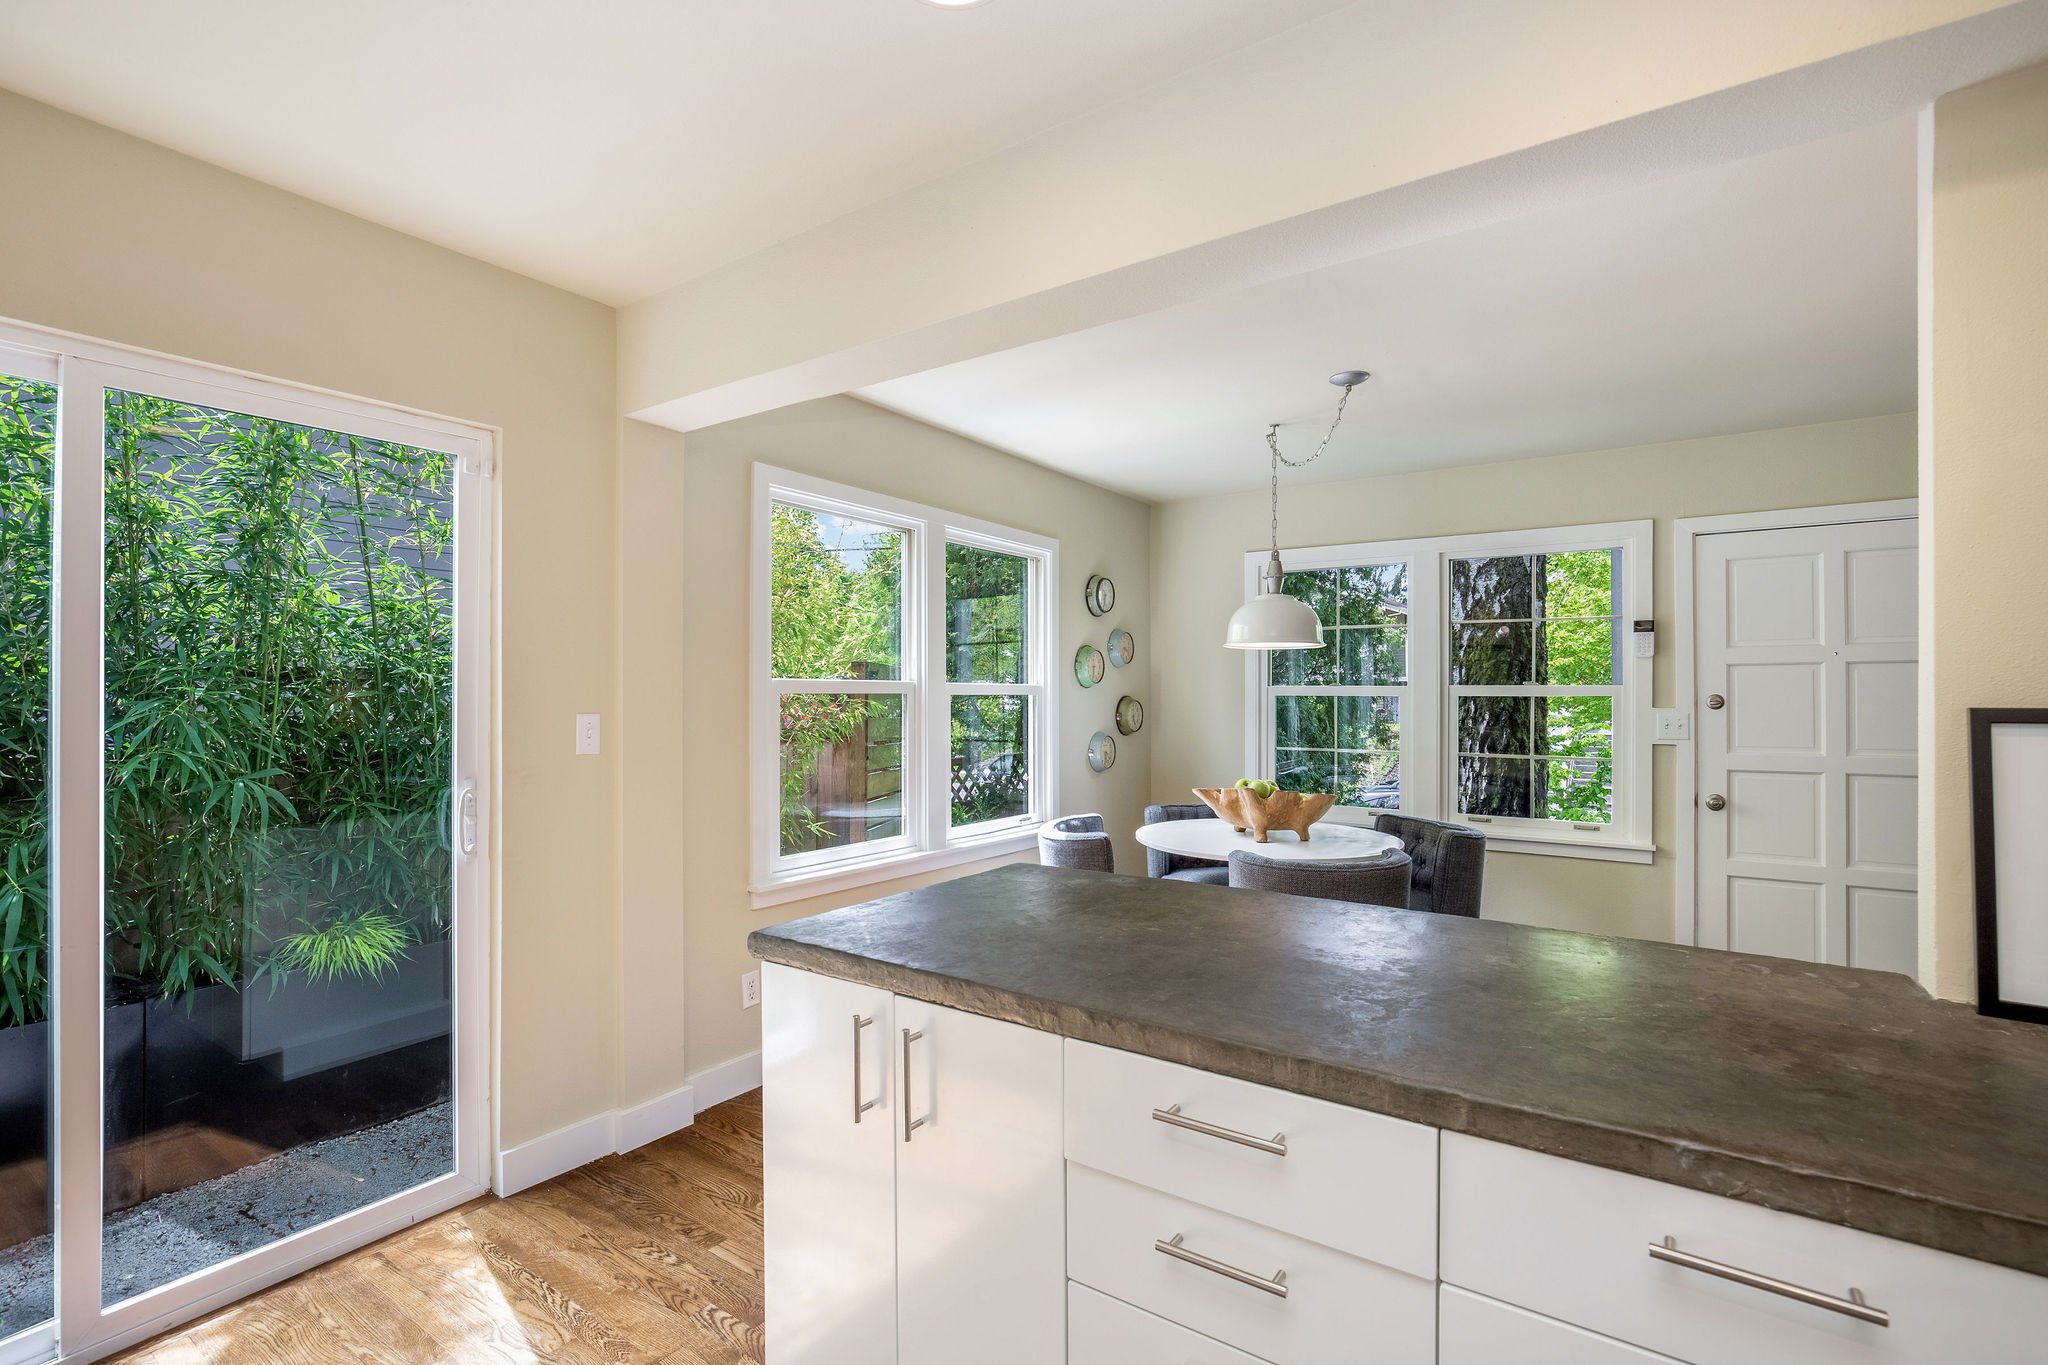  image description: interior kitchen with connected island, hardwoods, brown countertops and sliding glass door 